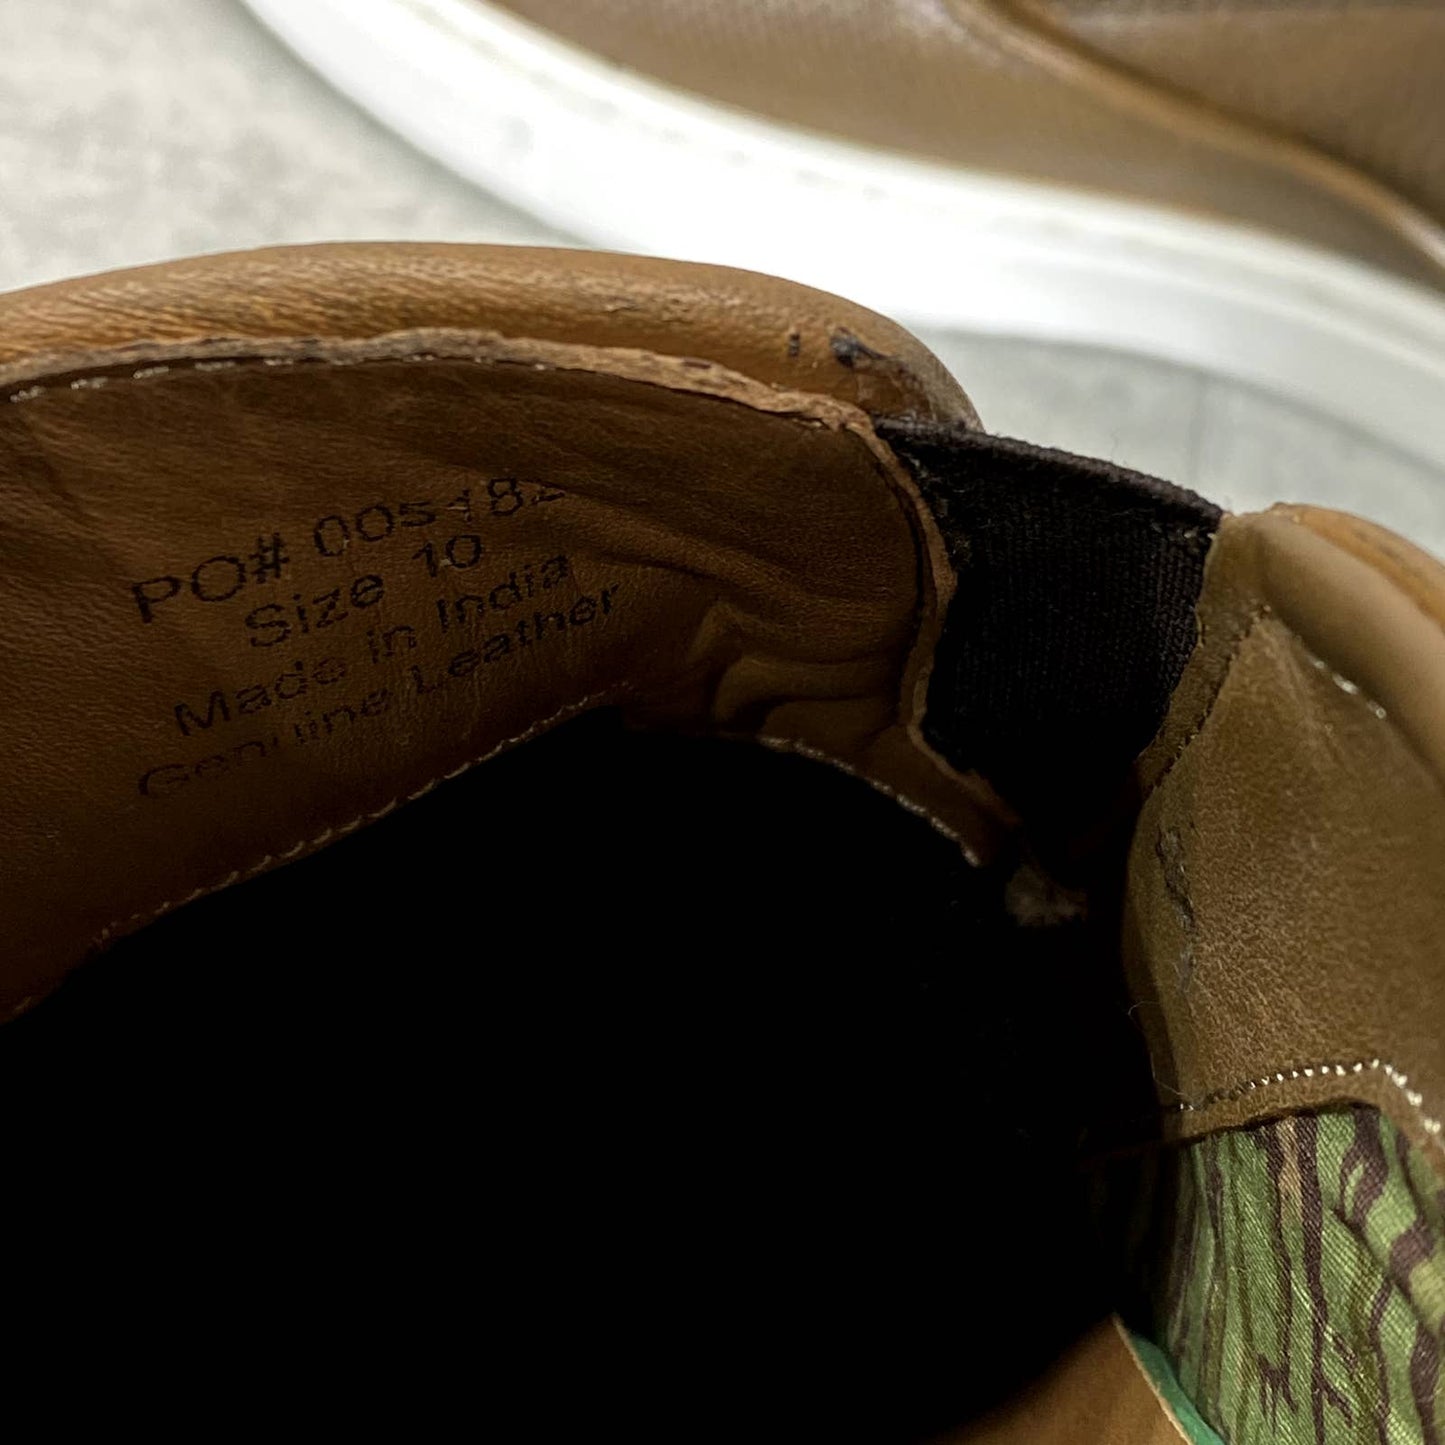 THOMAS & VINE Men's Brown Leather Conley Slip-On Sneakers SZ 10